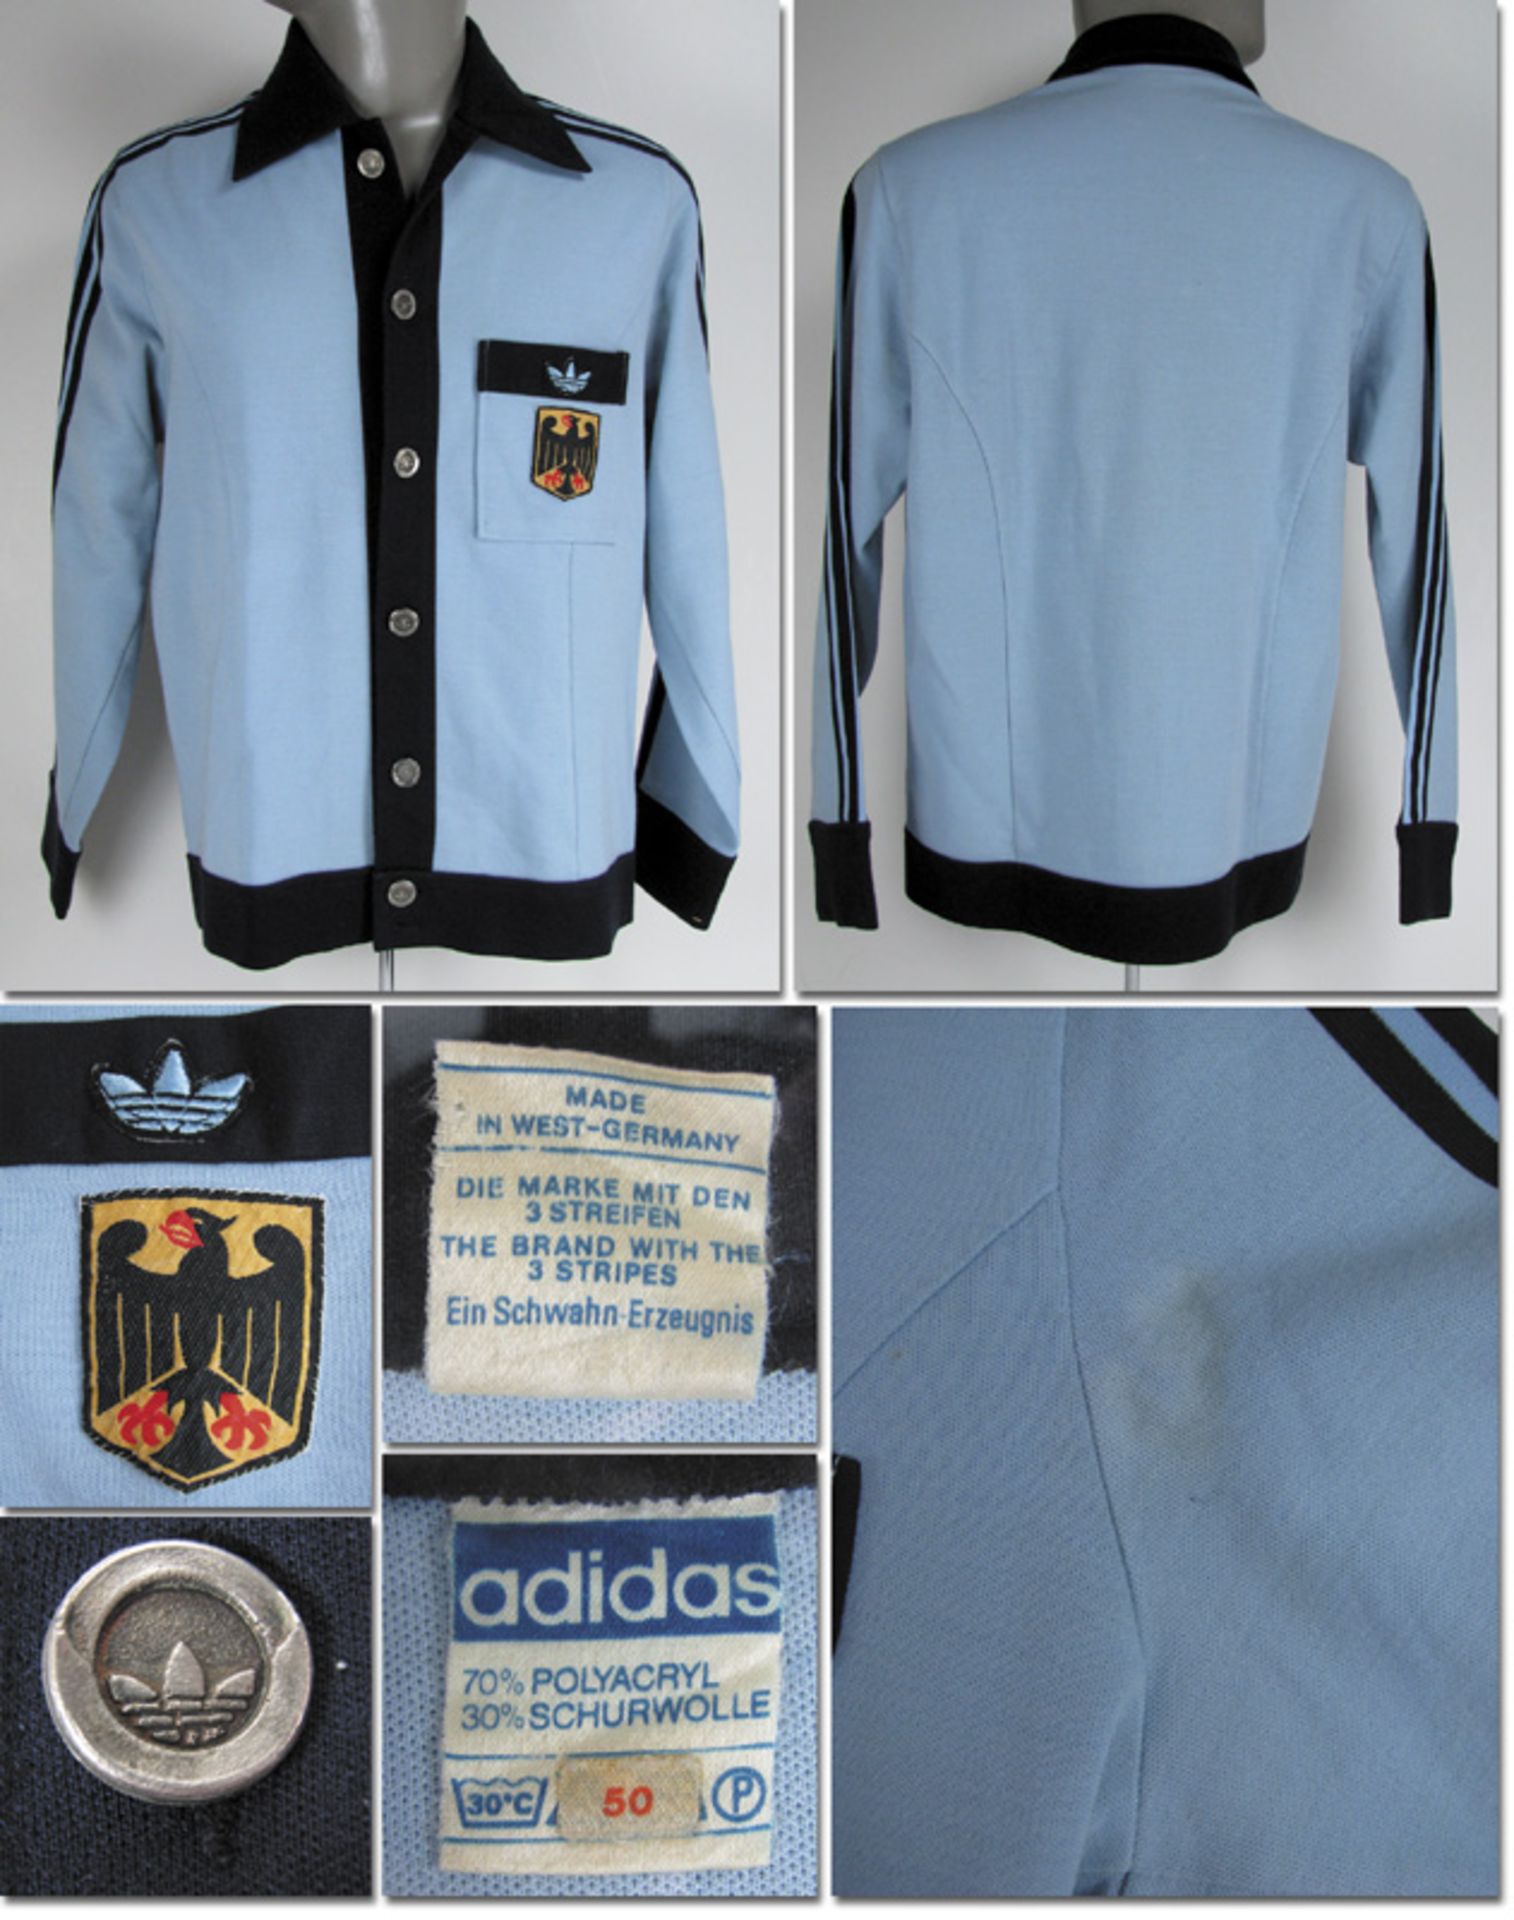 Olympics 1972 match worn Sport Jacket Germany - Original match worn jacket Germany with federal eagl